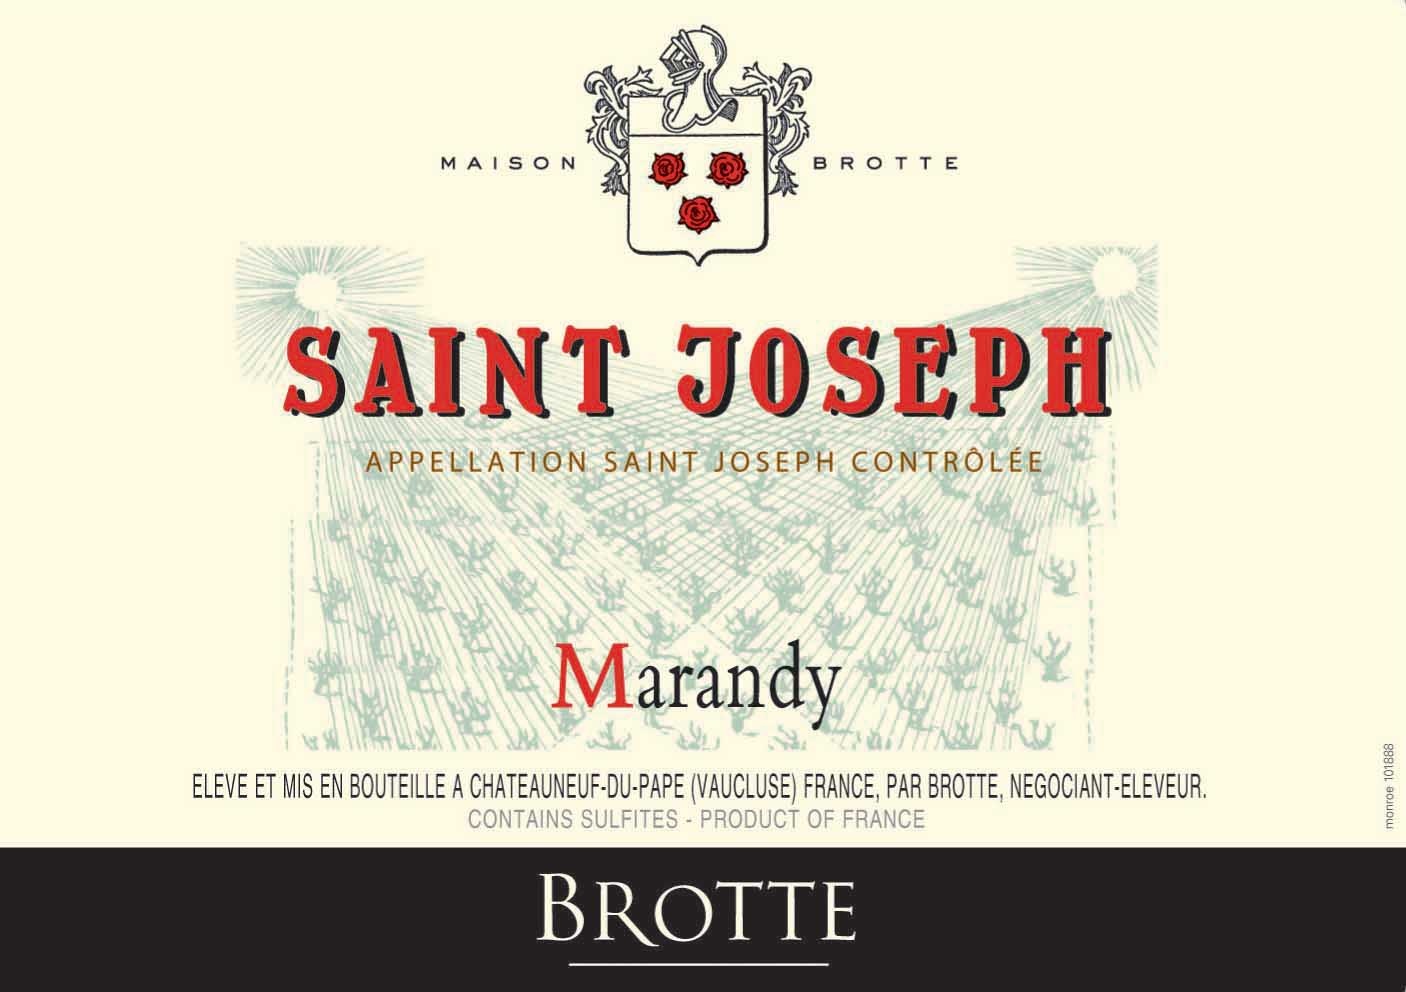 Brotte - Saint Joseph - Marandy label